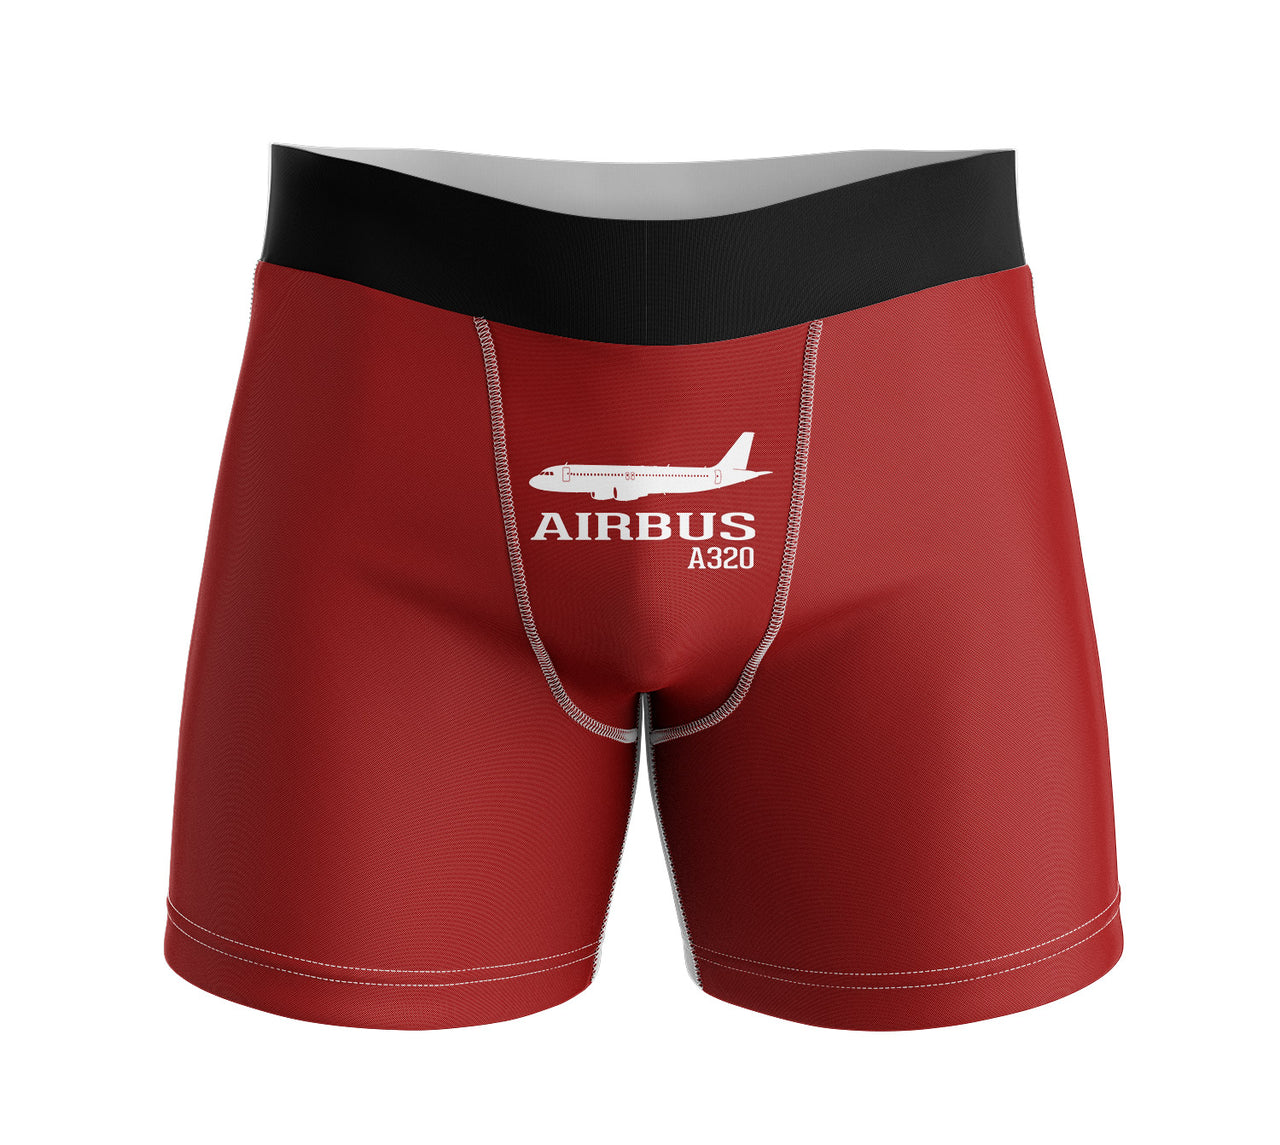 Airbus A320 Printed Designed Men Boxers